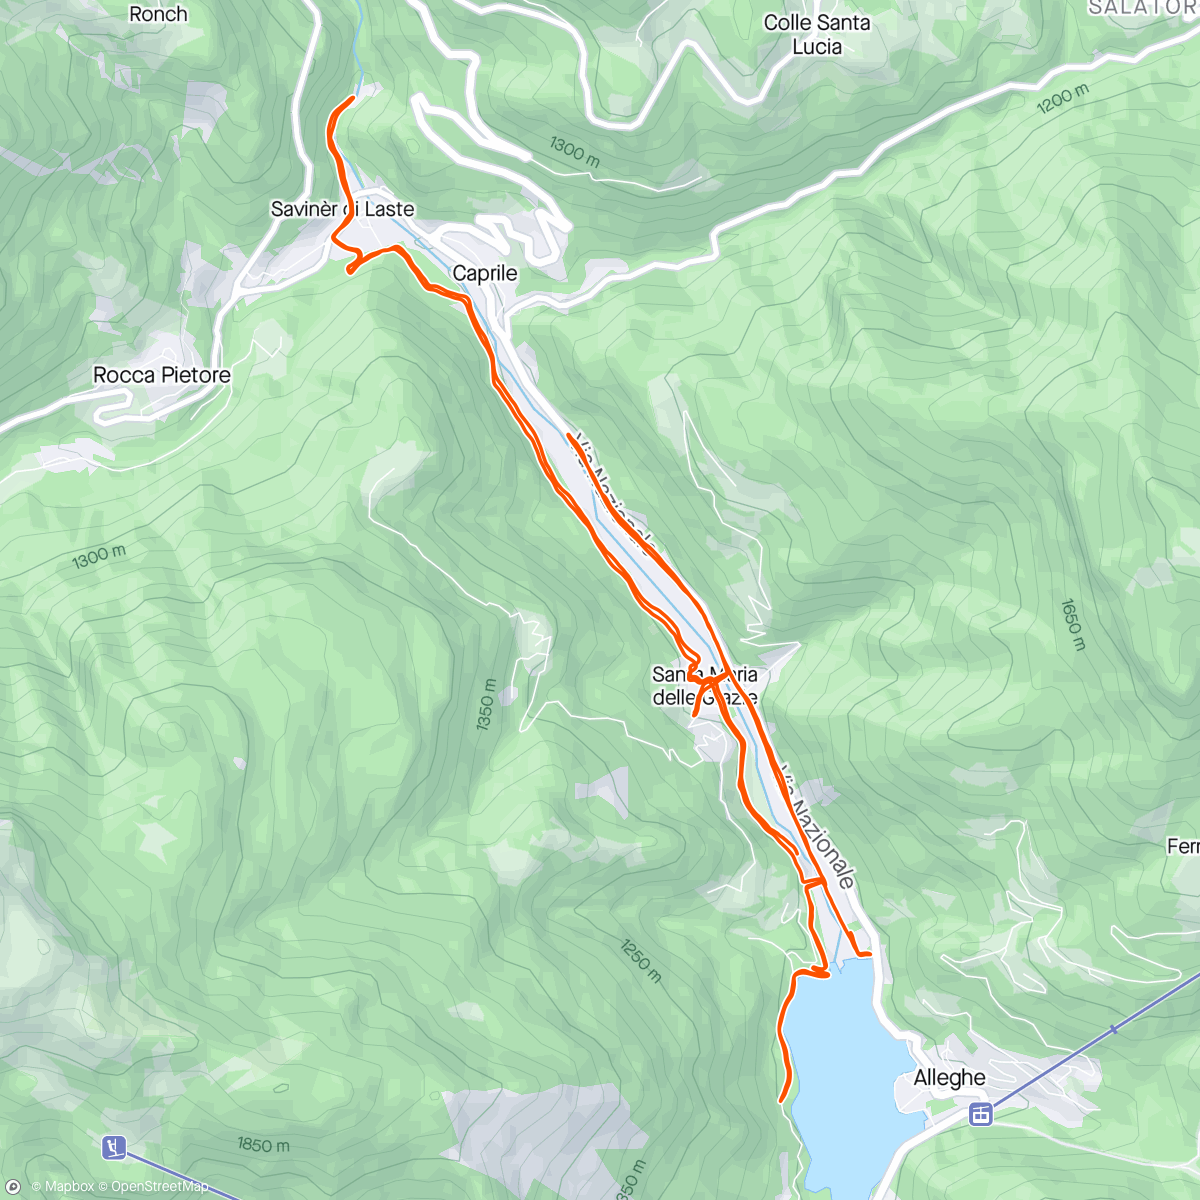 Map of the activity, Medio e sprint in salita col vecio👌🏻